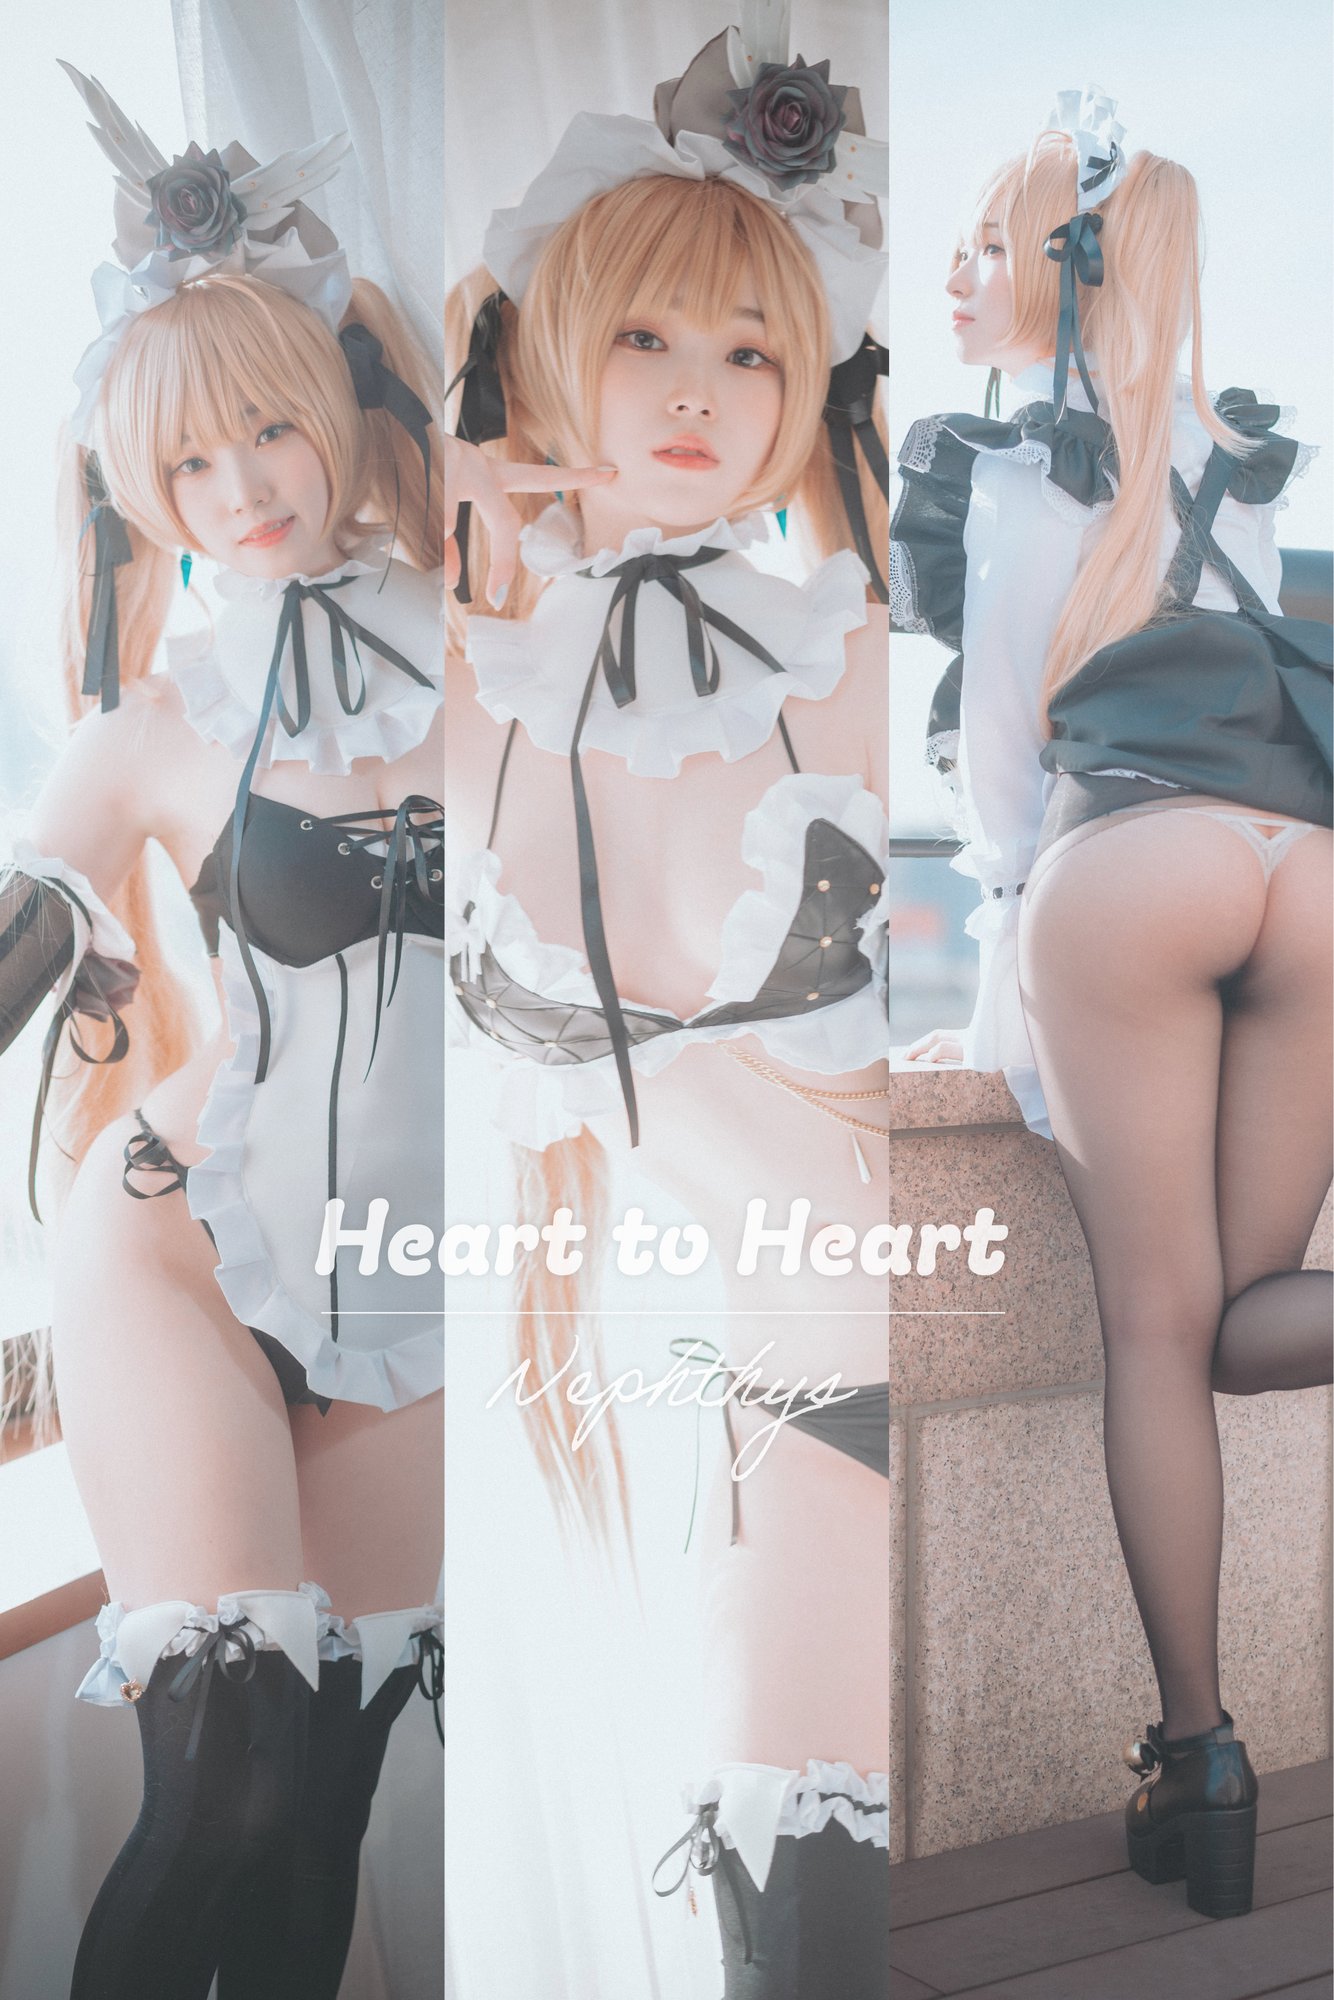 [DJAWA] Heart to Heart  Nephthys - Version_A